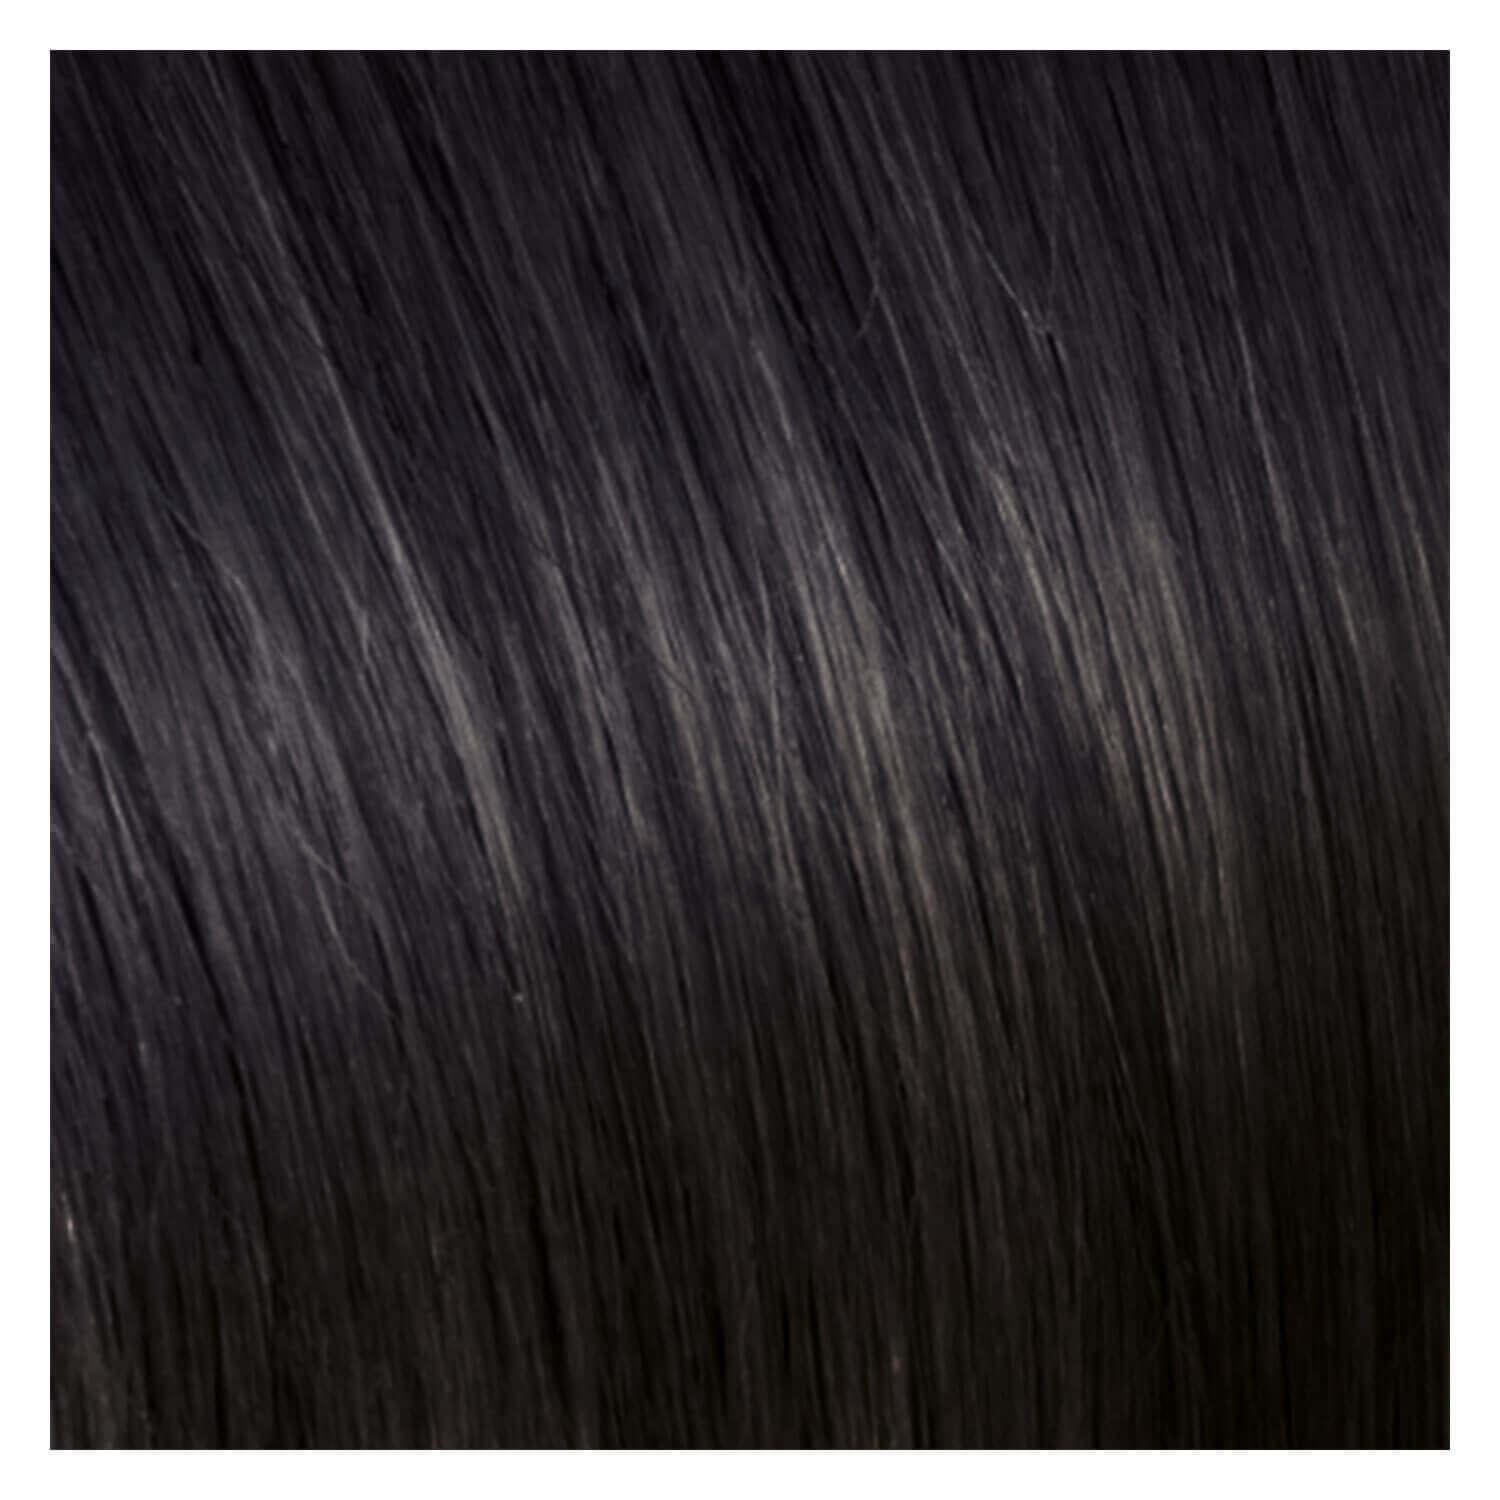 SHE Bonding-System Hair Extensions Wavy - 1B Schwarz 55/60cm